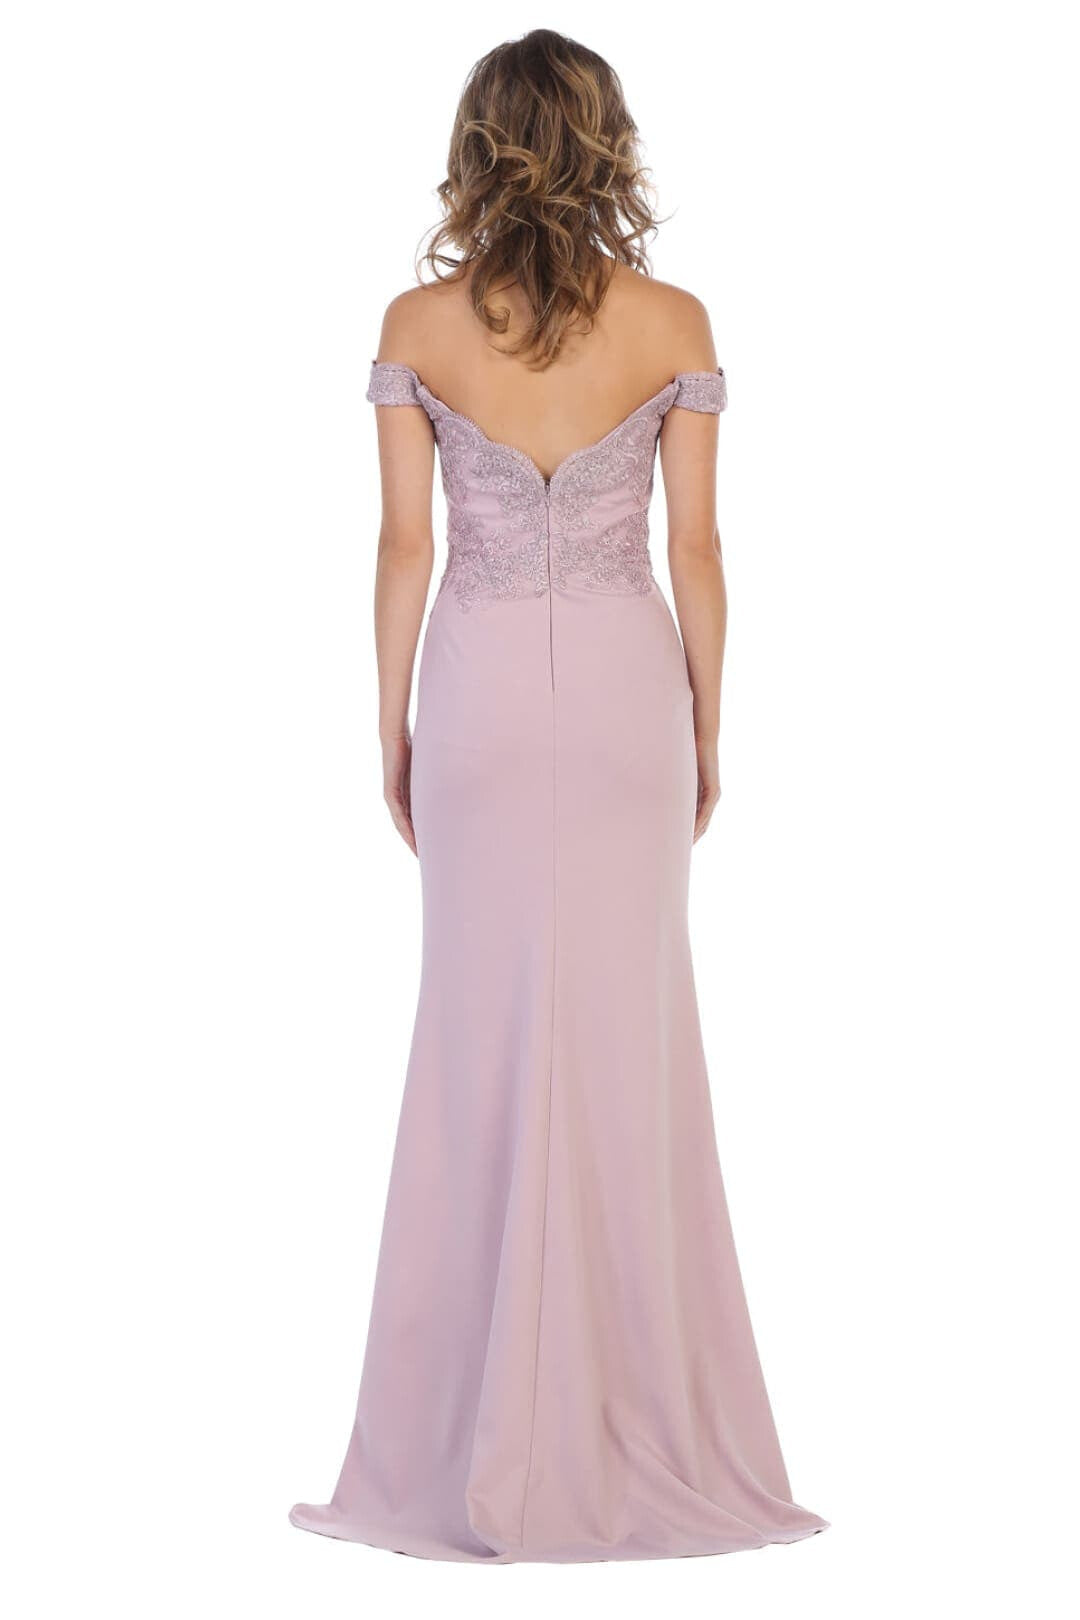 May Queen MQ1529 Elegant Form Fitting Evening Dress